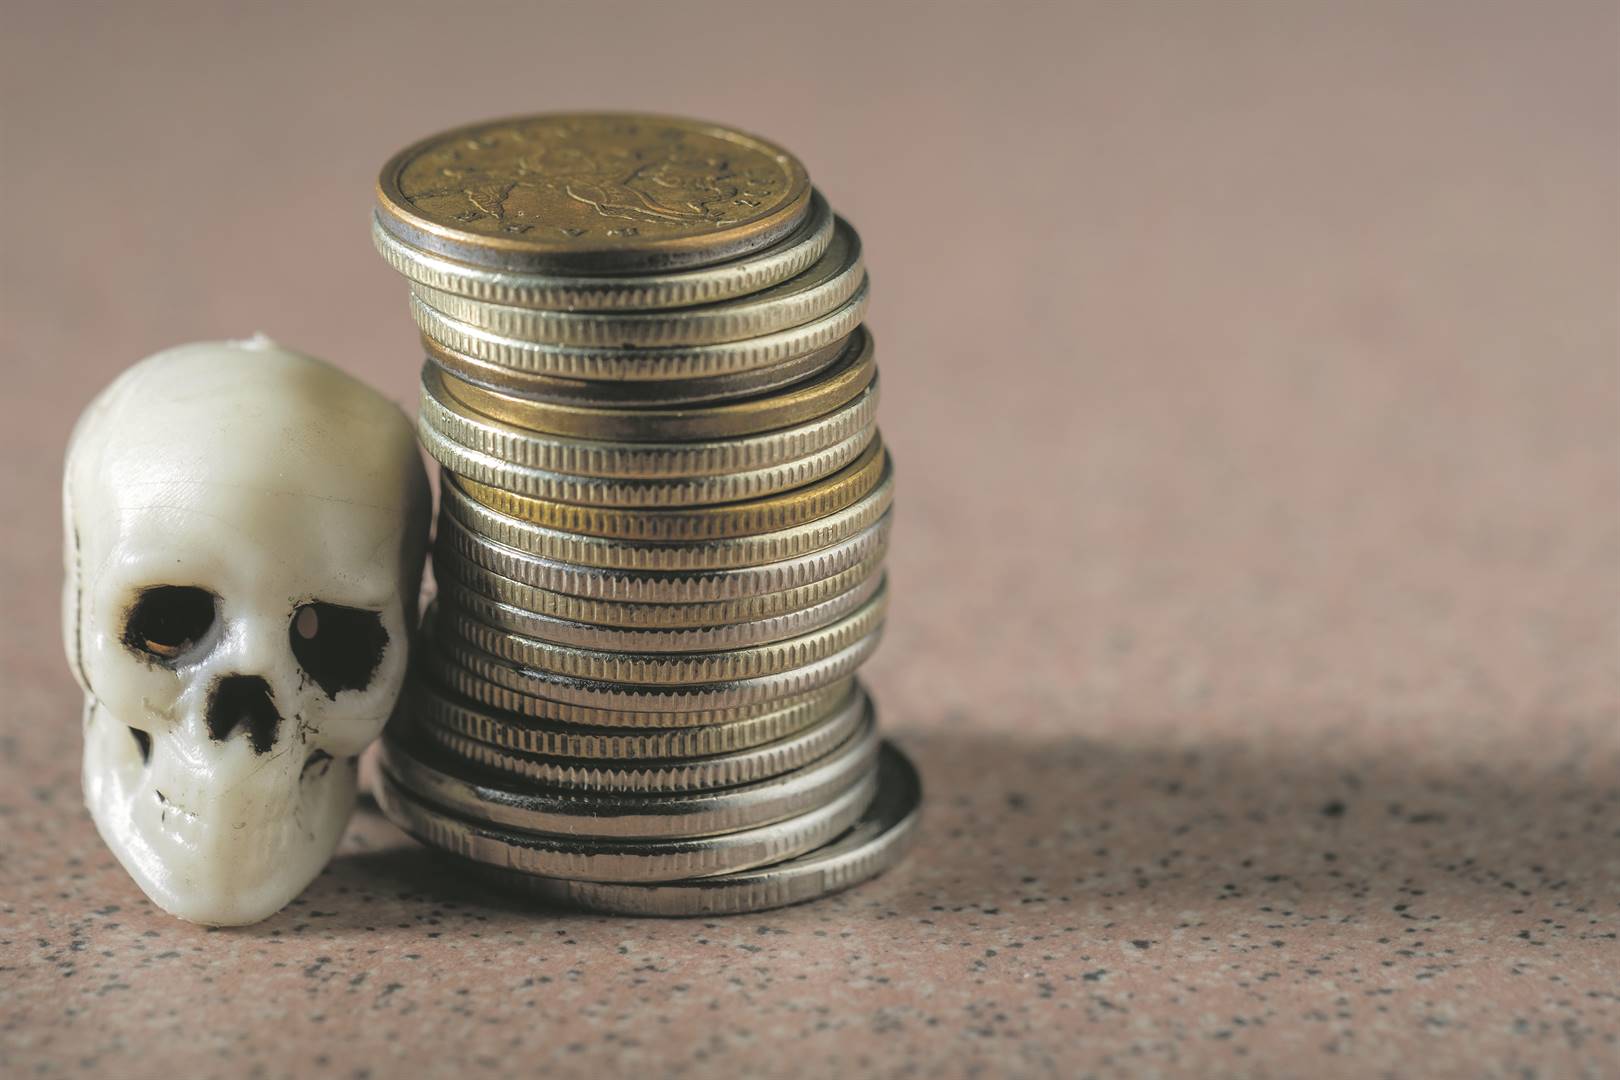 Understanding the cost of death